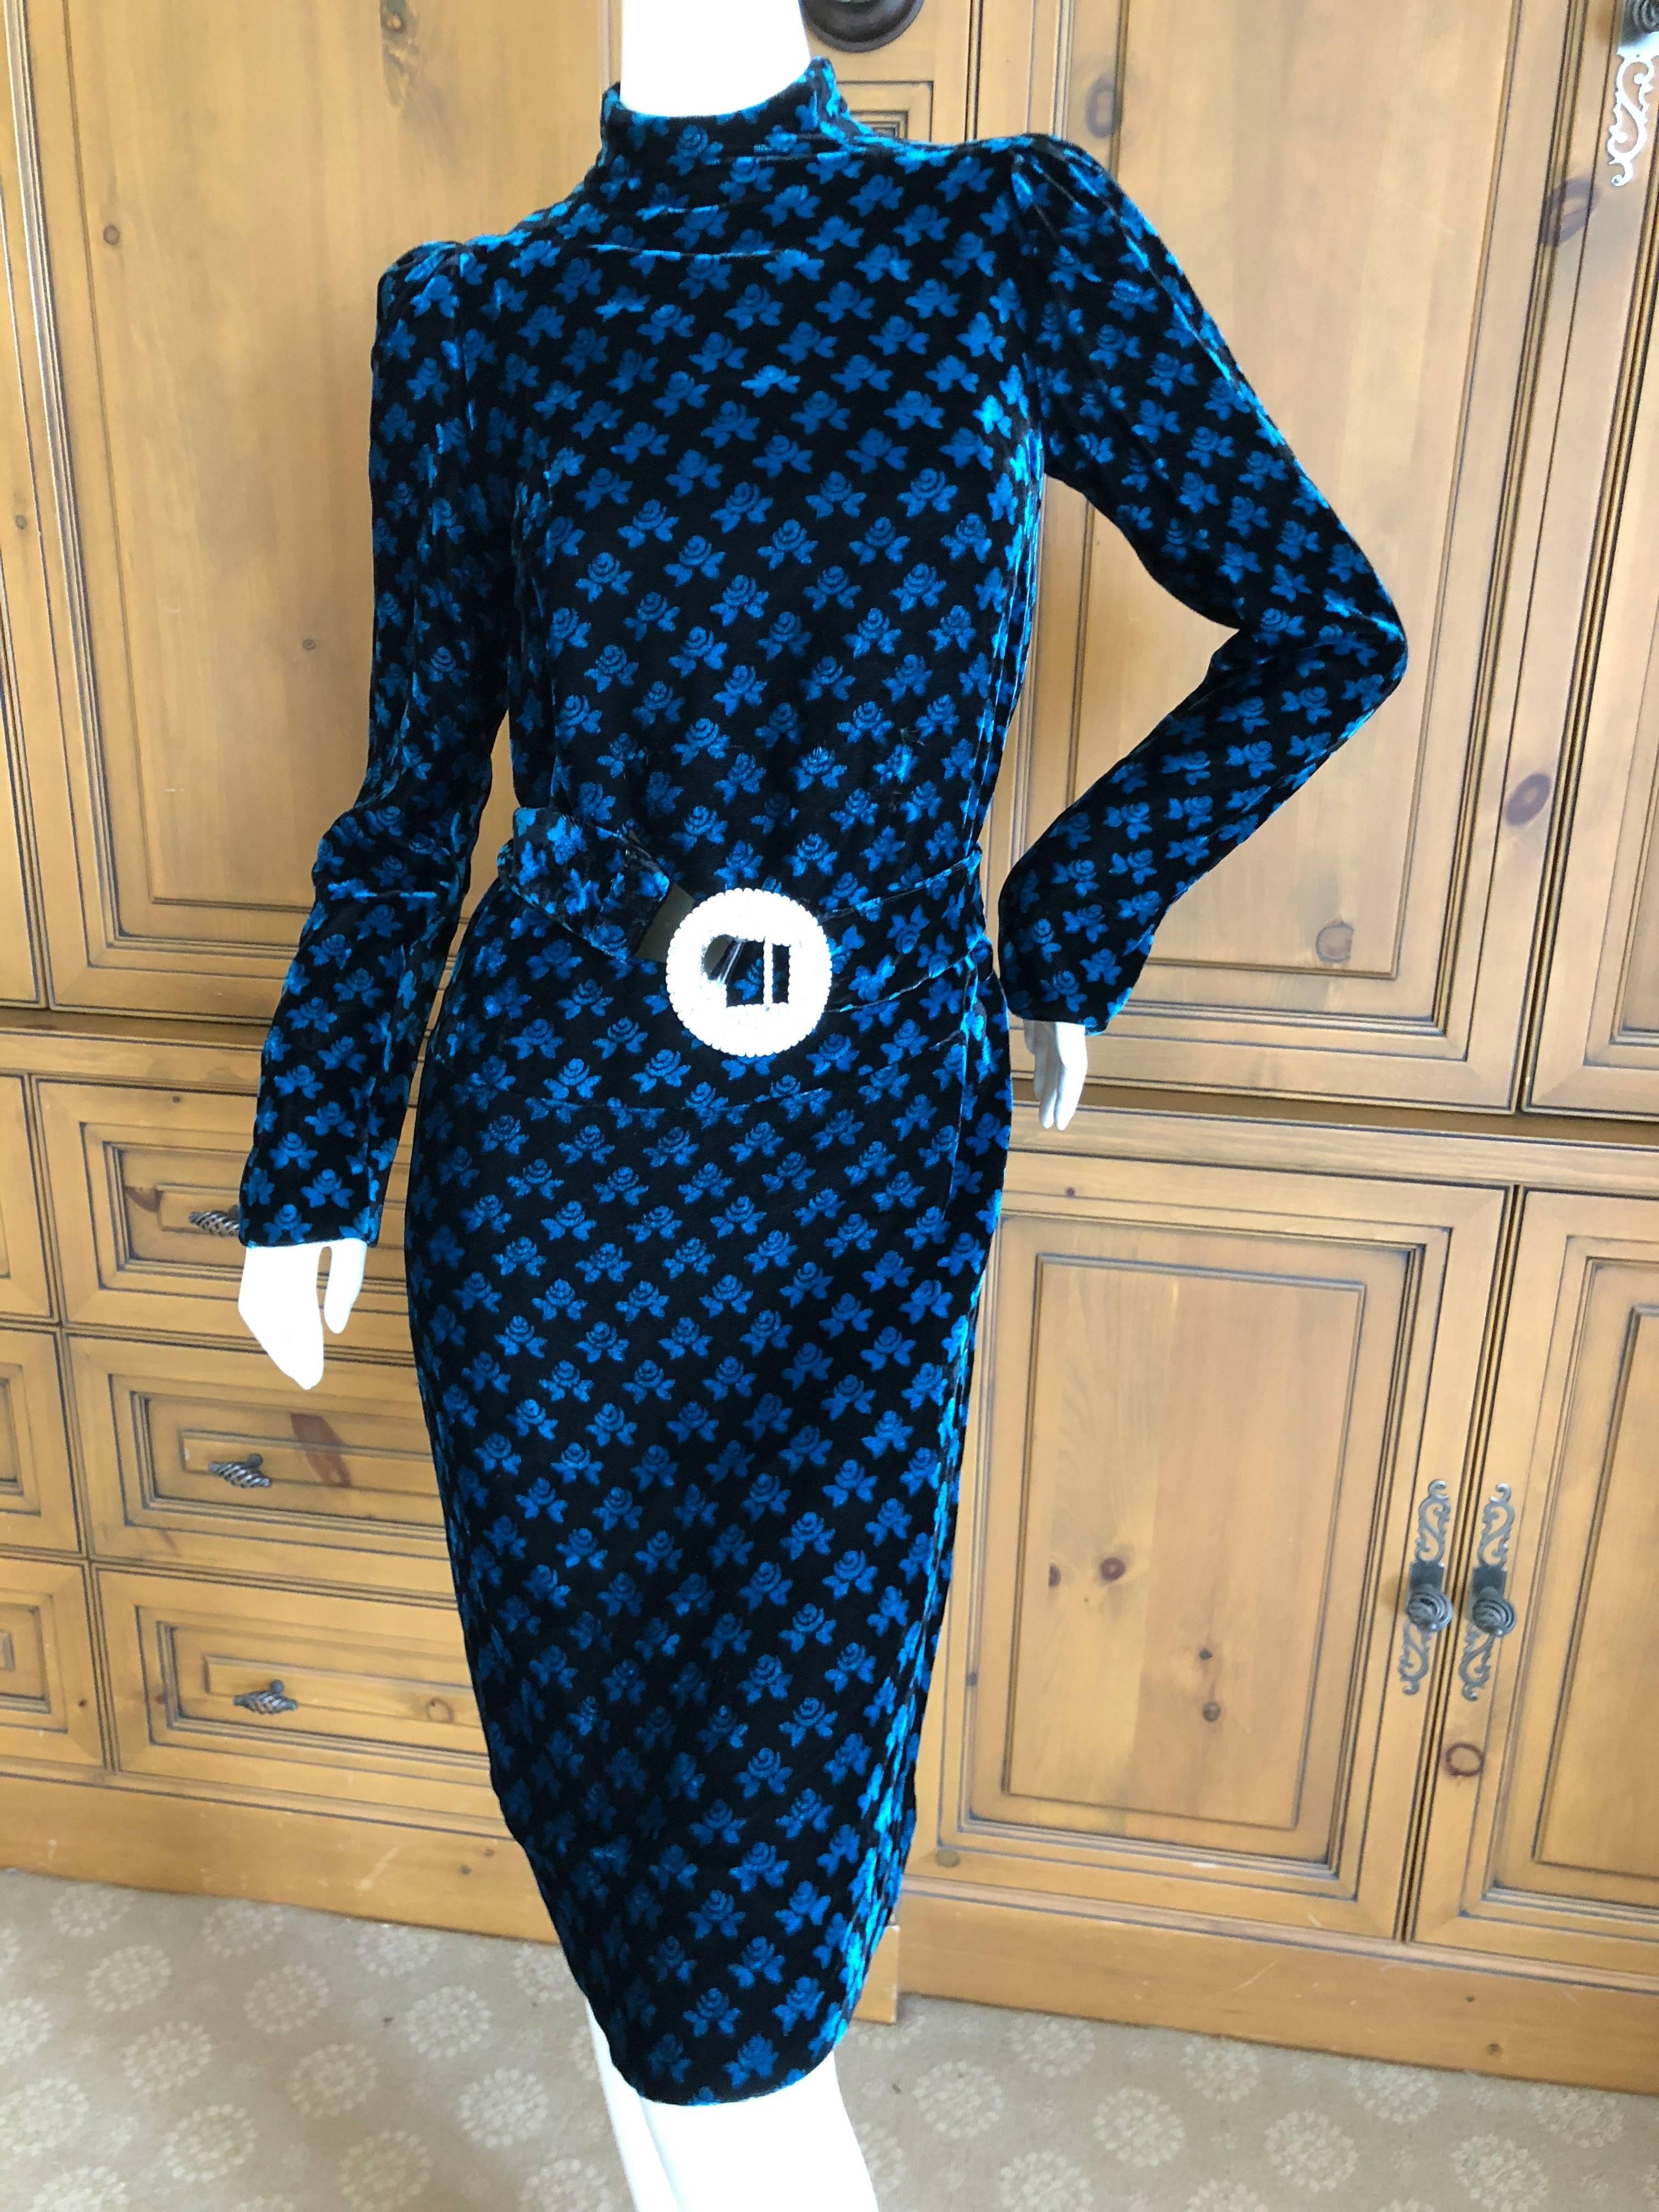 Cardinali 1970's Navy Blue Velvet Cocktail Dress with Rhinestone Crystal Belt For Sale 1